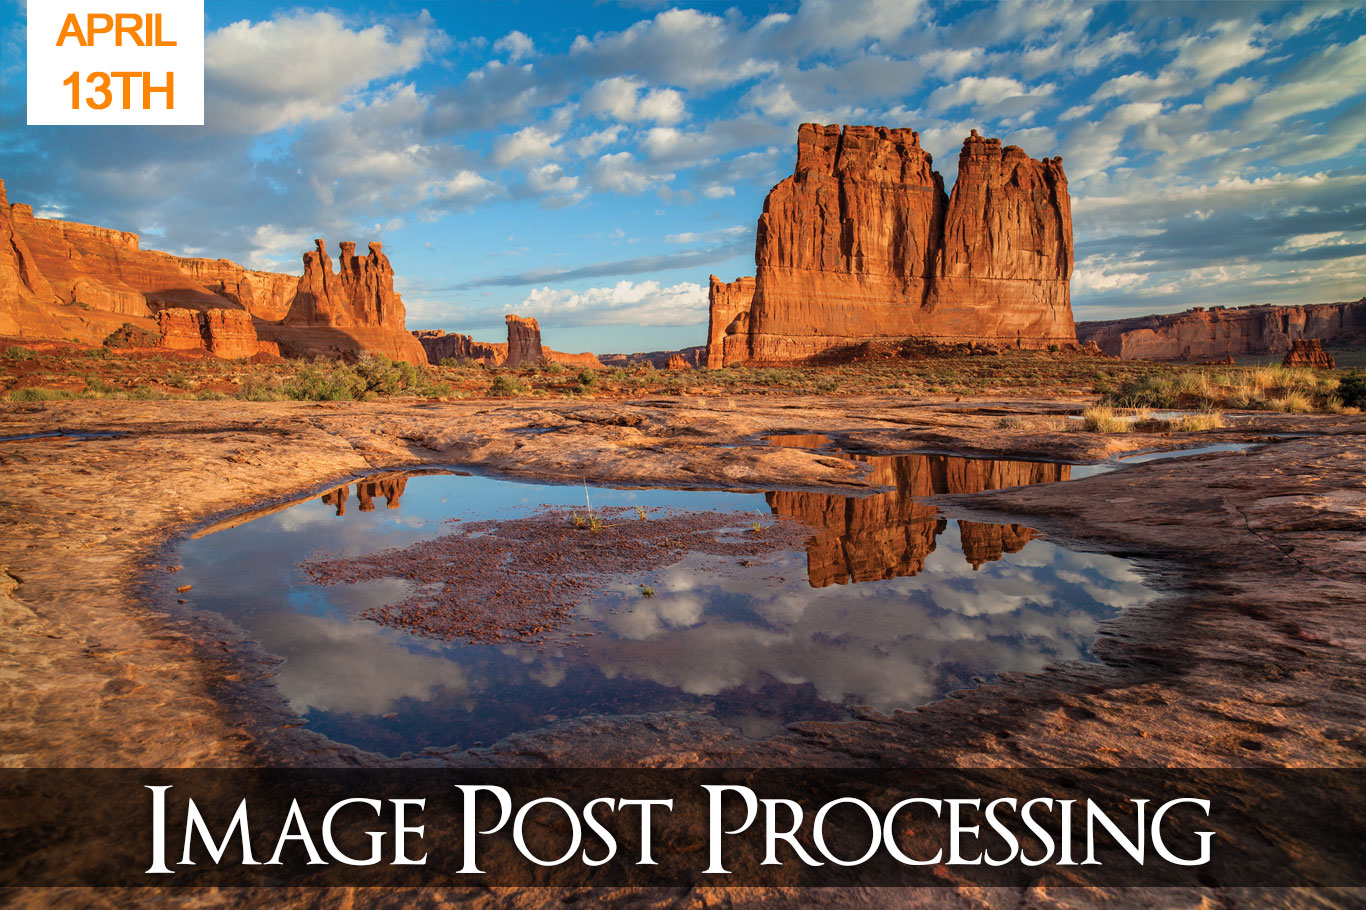 Fototripper - Image Post Processing Workshop